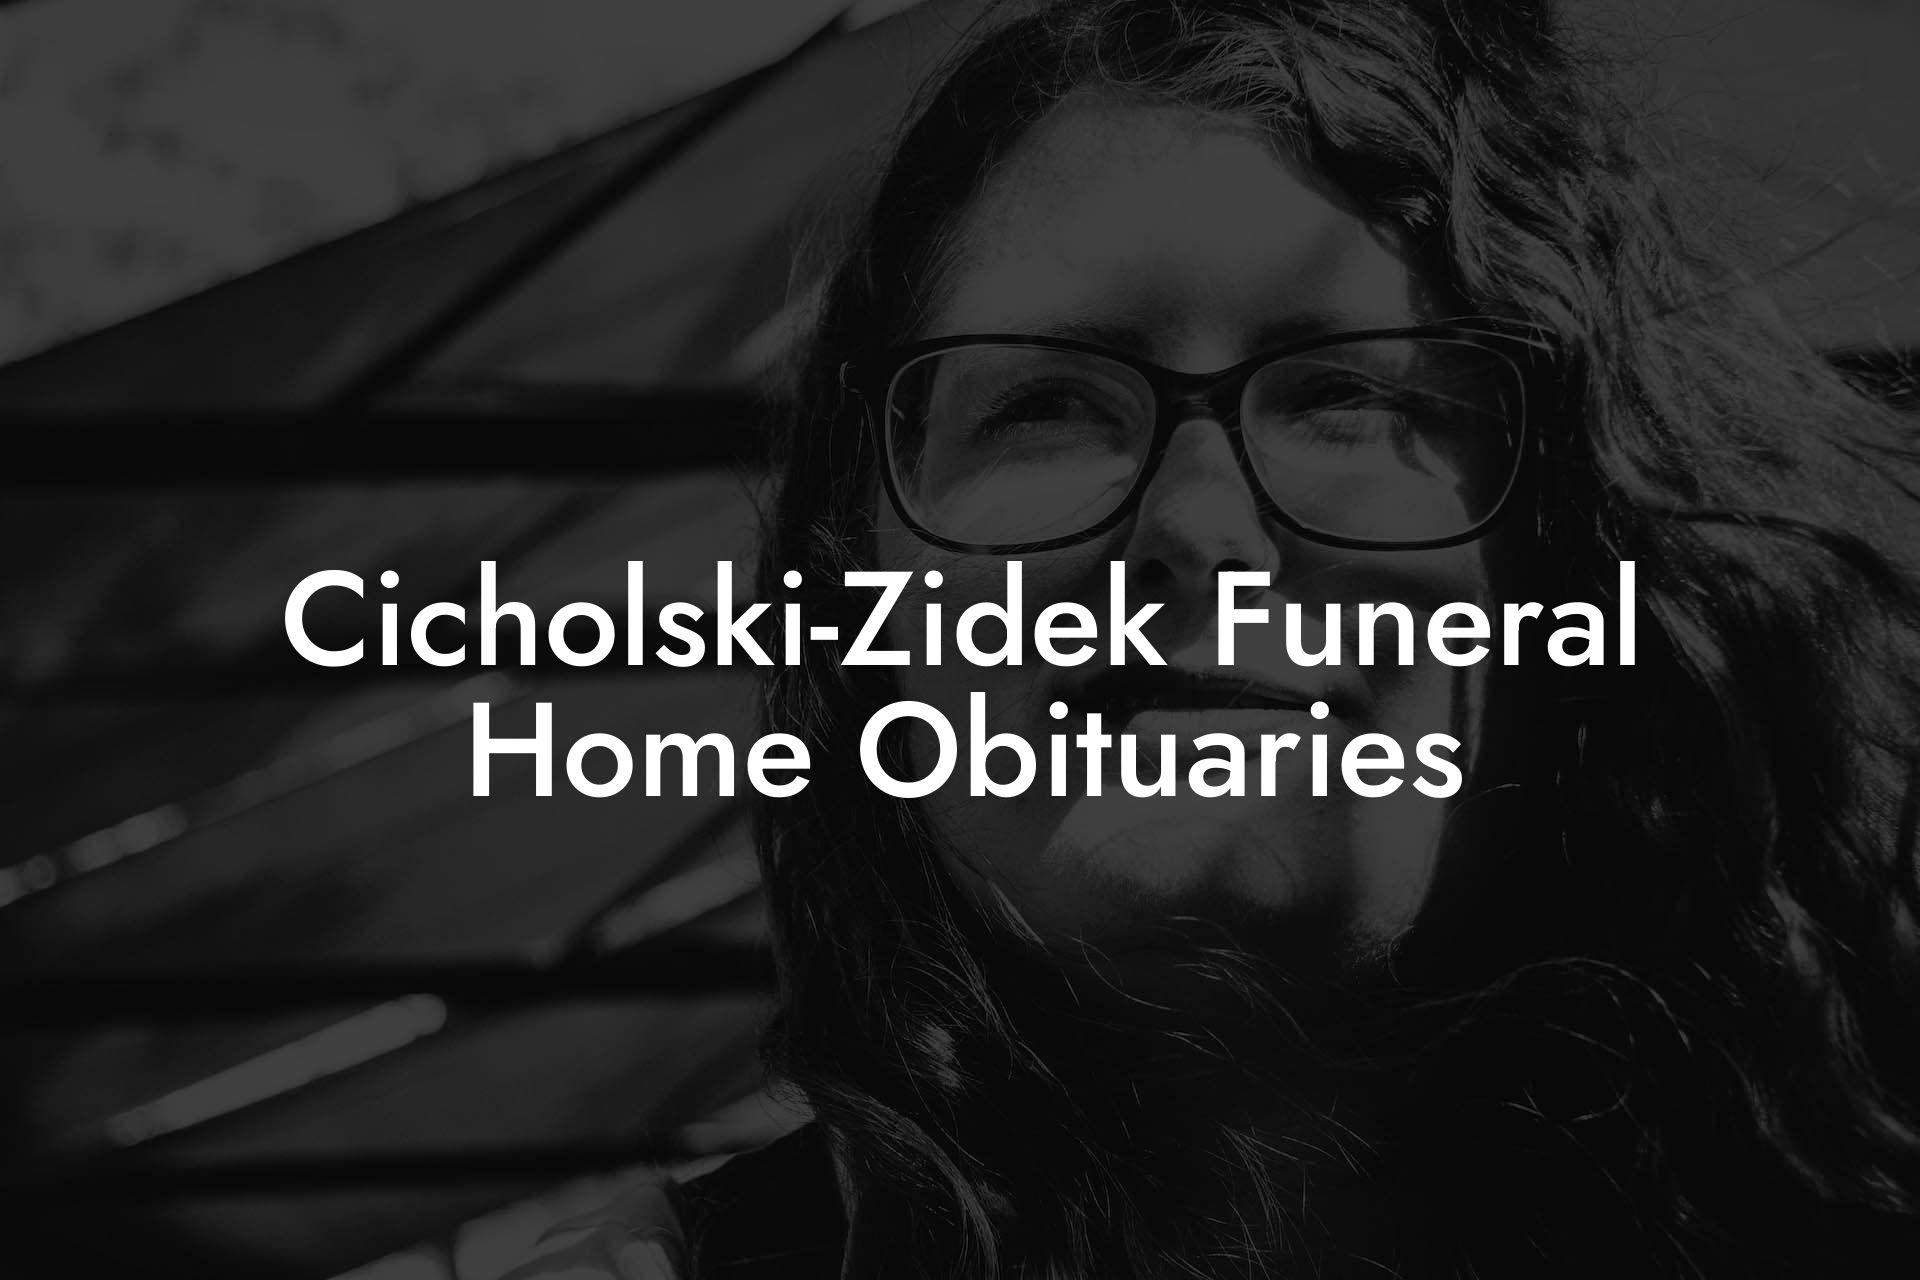 Cicholski-Zidek Funeral Home Obituaries